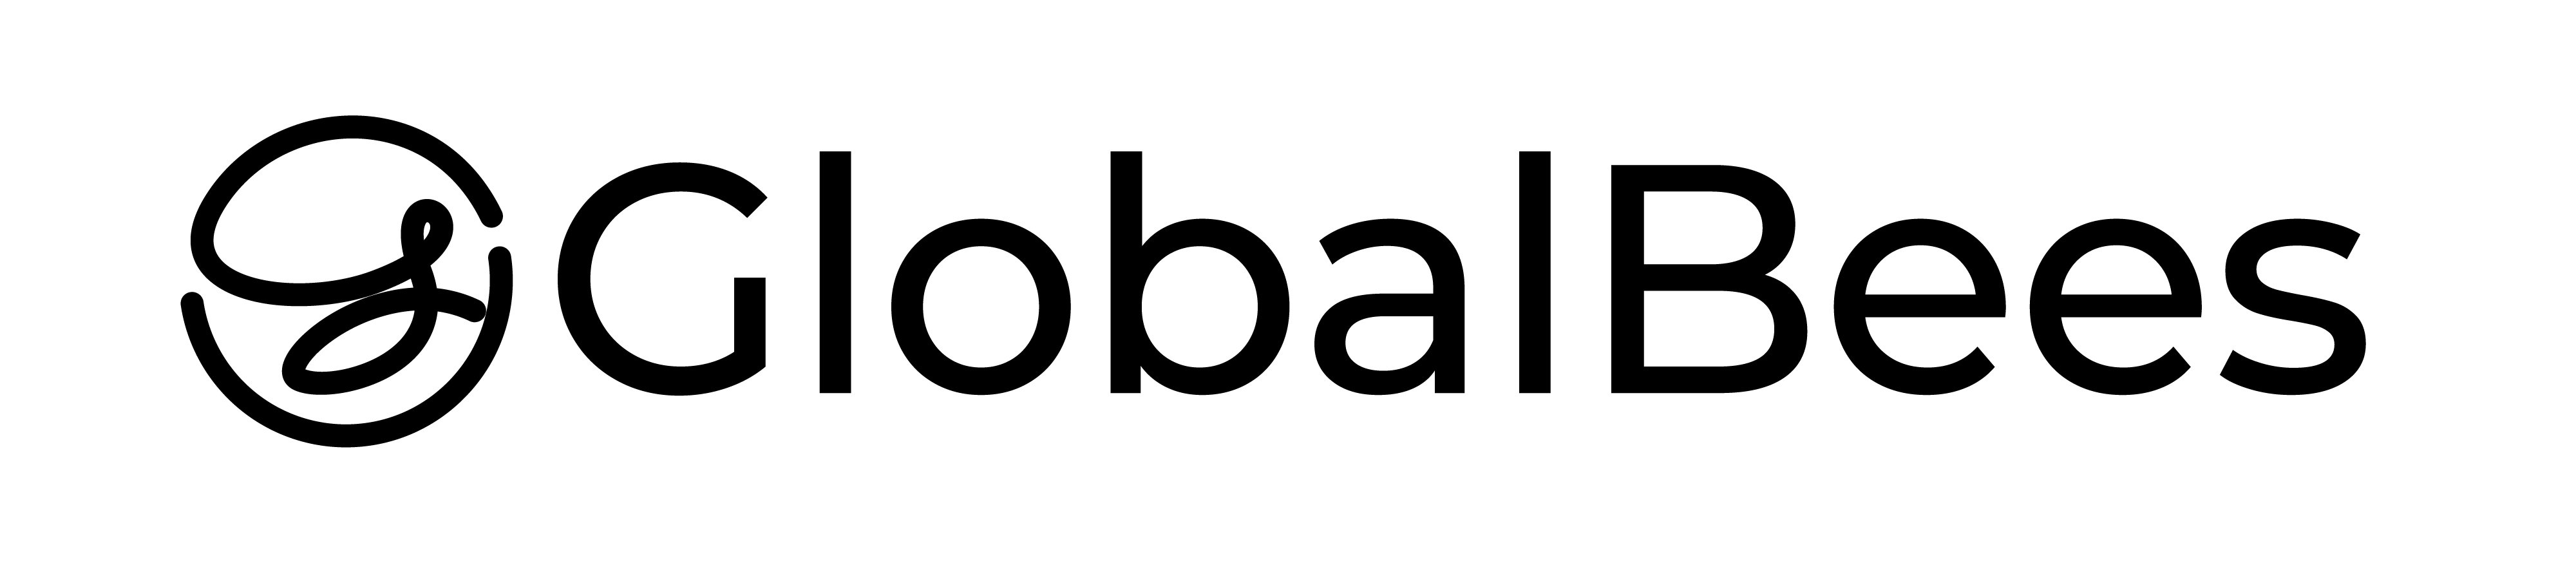 Globalbees logo variations [recovered] globalbees logo black  (2)